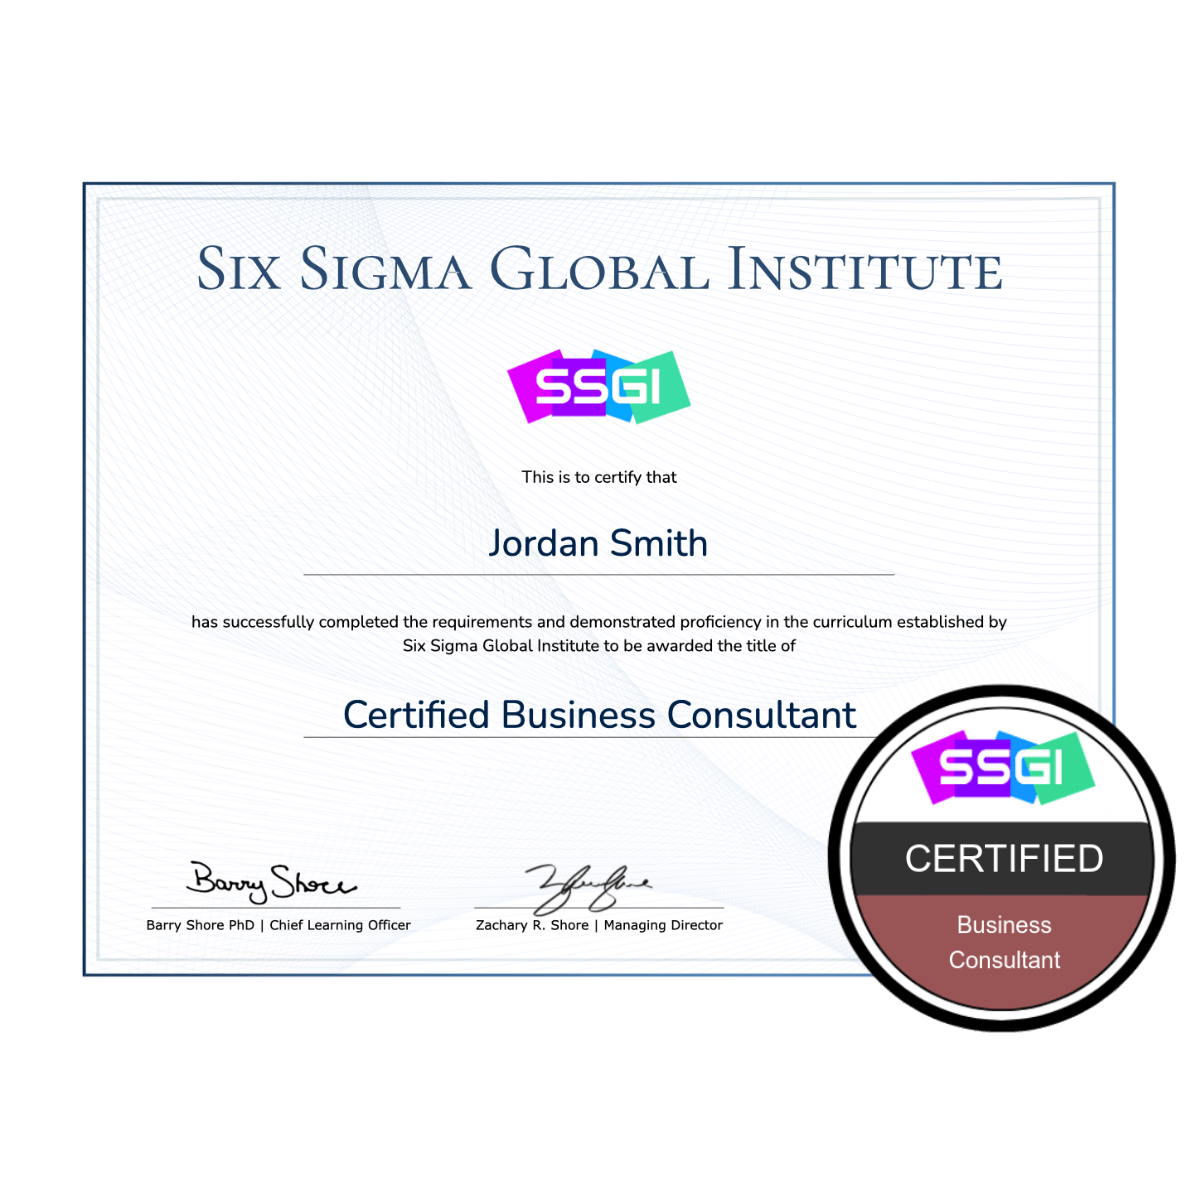 SSGI Business Consultant Certification